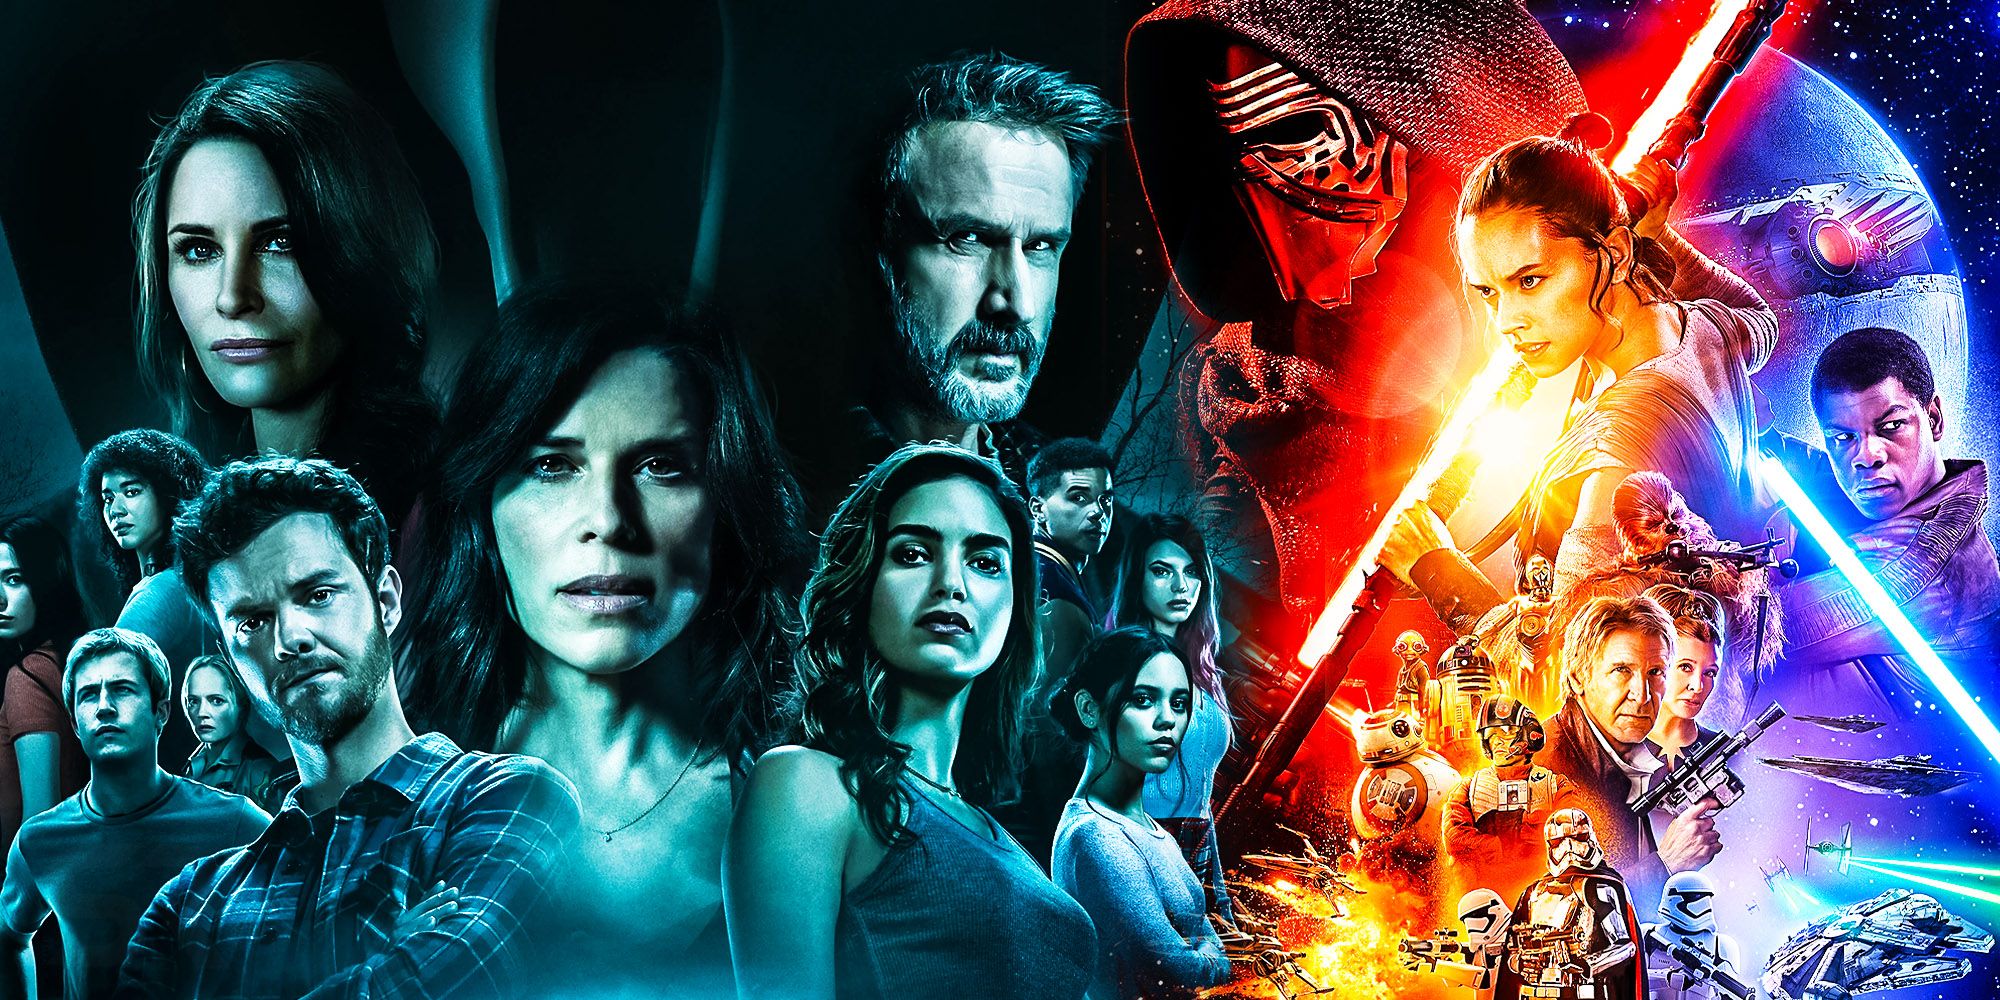 Scream 2022 Star wars the force awakens legacy characters